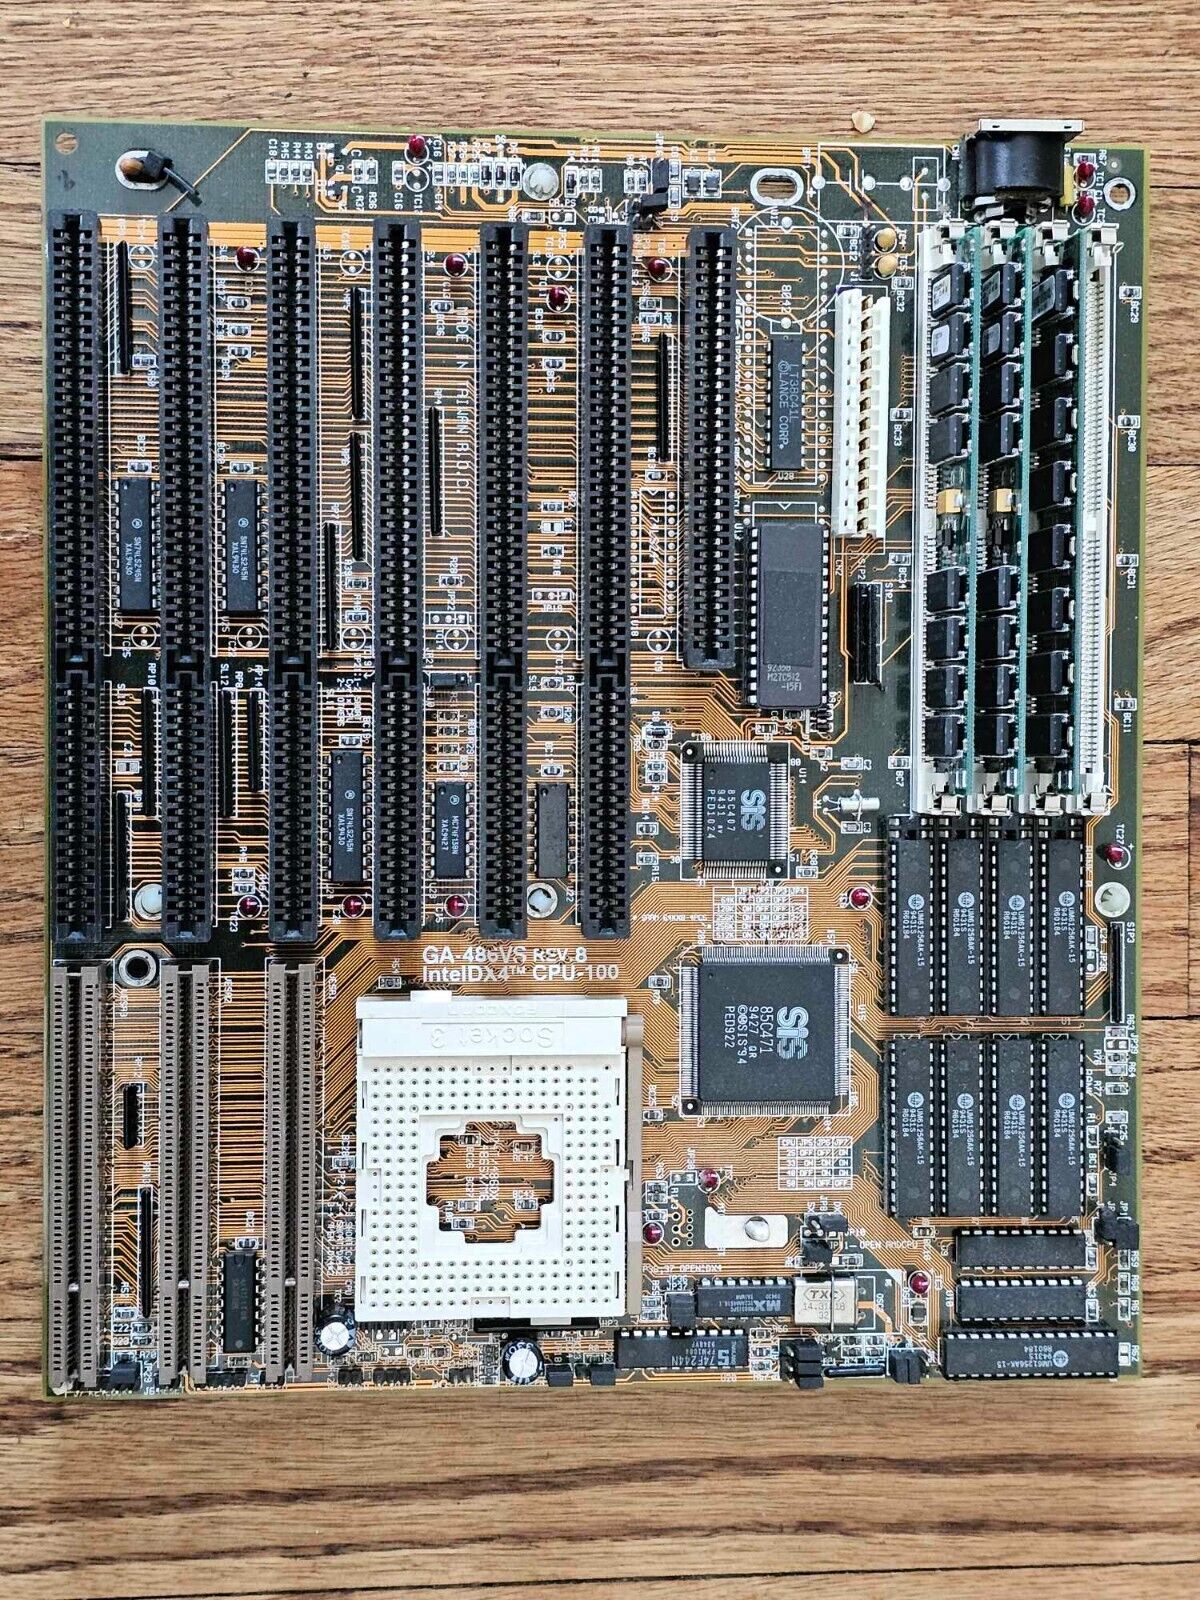 Rare Retro Vintage Gigabyte GA-486VS Rev 8 AT VLB Motherboard DX4 CPU-100 Clean